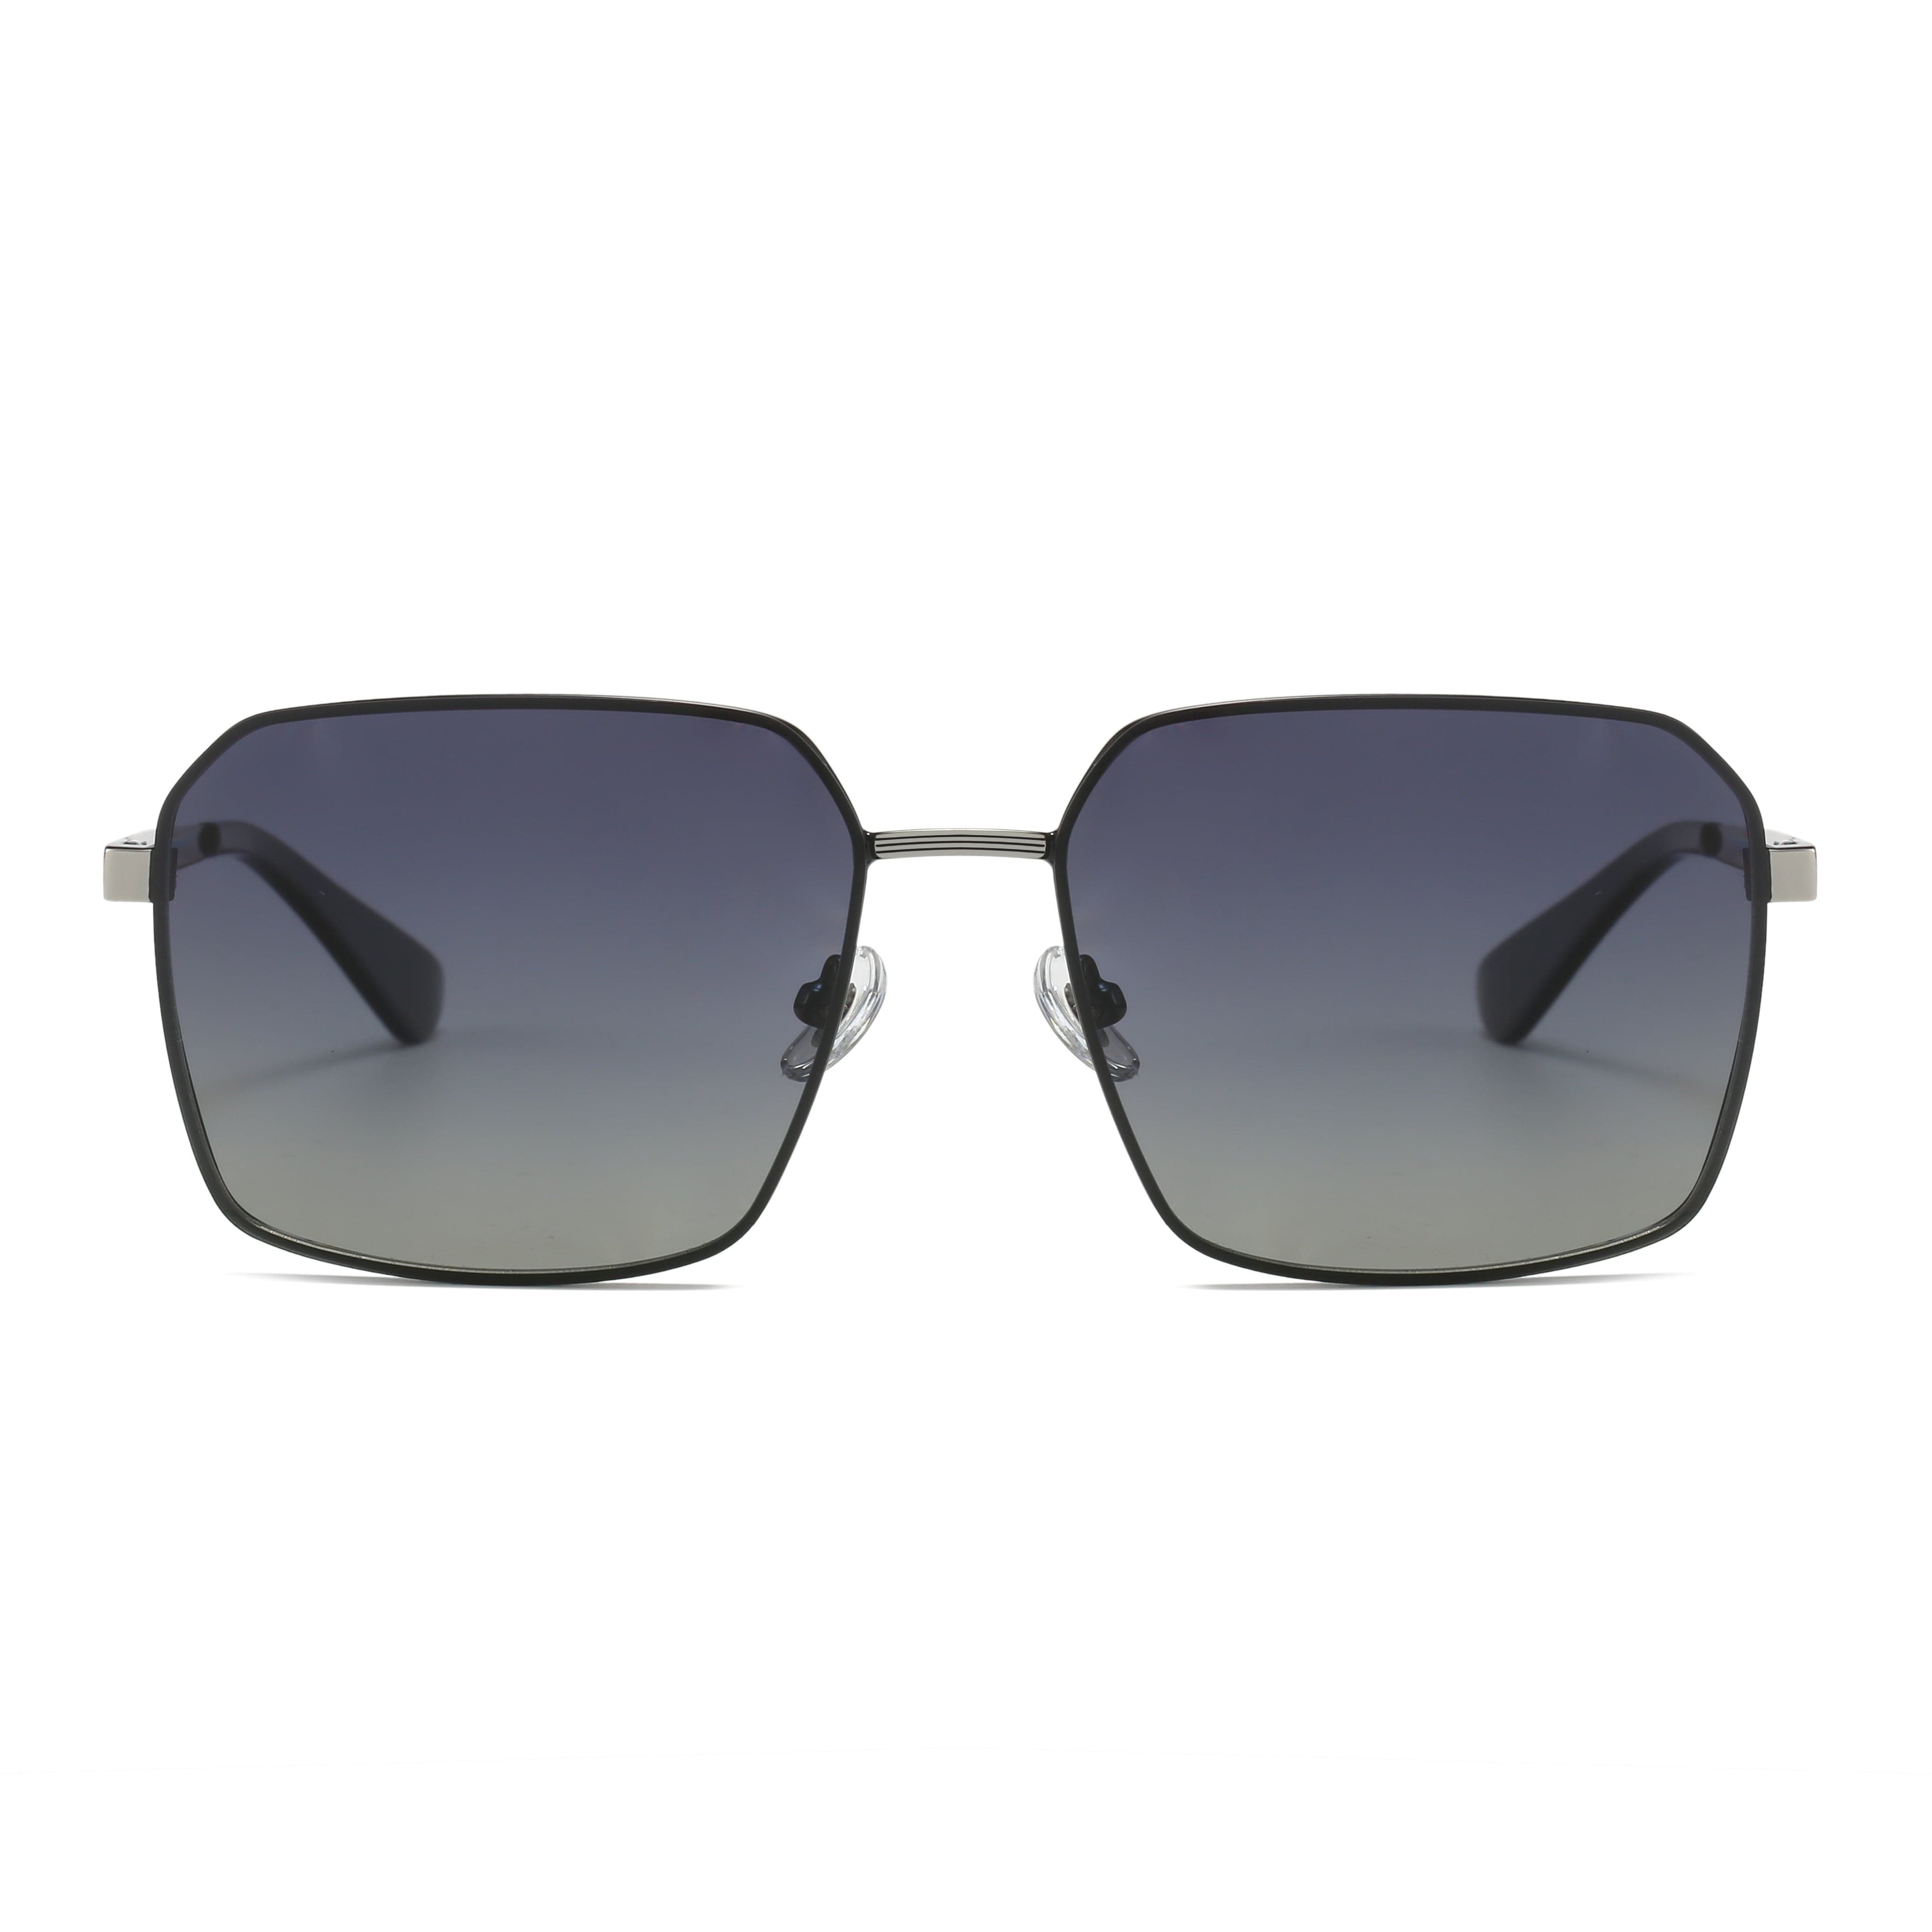 GIUSTIZIERI VECCHI Sunglasses Medium / Mid Grey Regal Radiance Uno